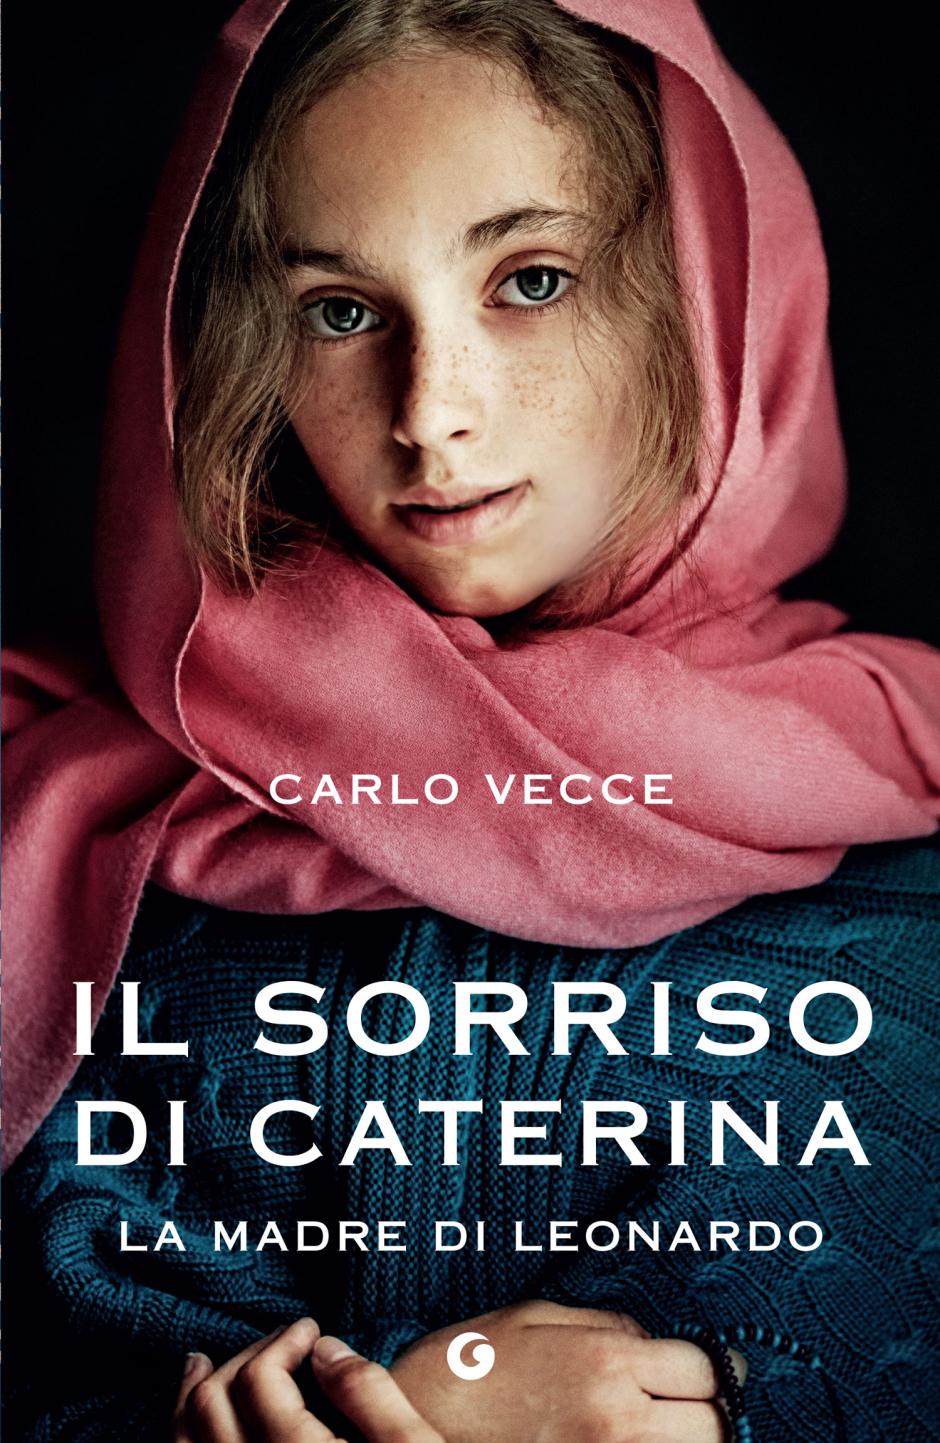 'Il sorriso di Caterina', el libro de Carlos Vecce que ahonda en el origen de la madre de Leonardo da Vinci